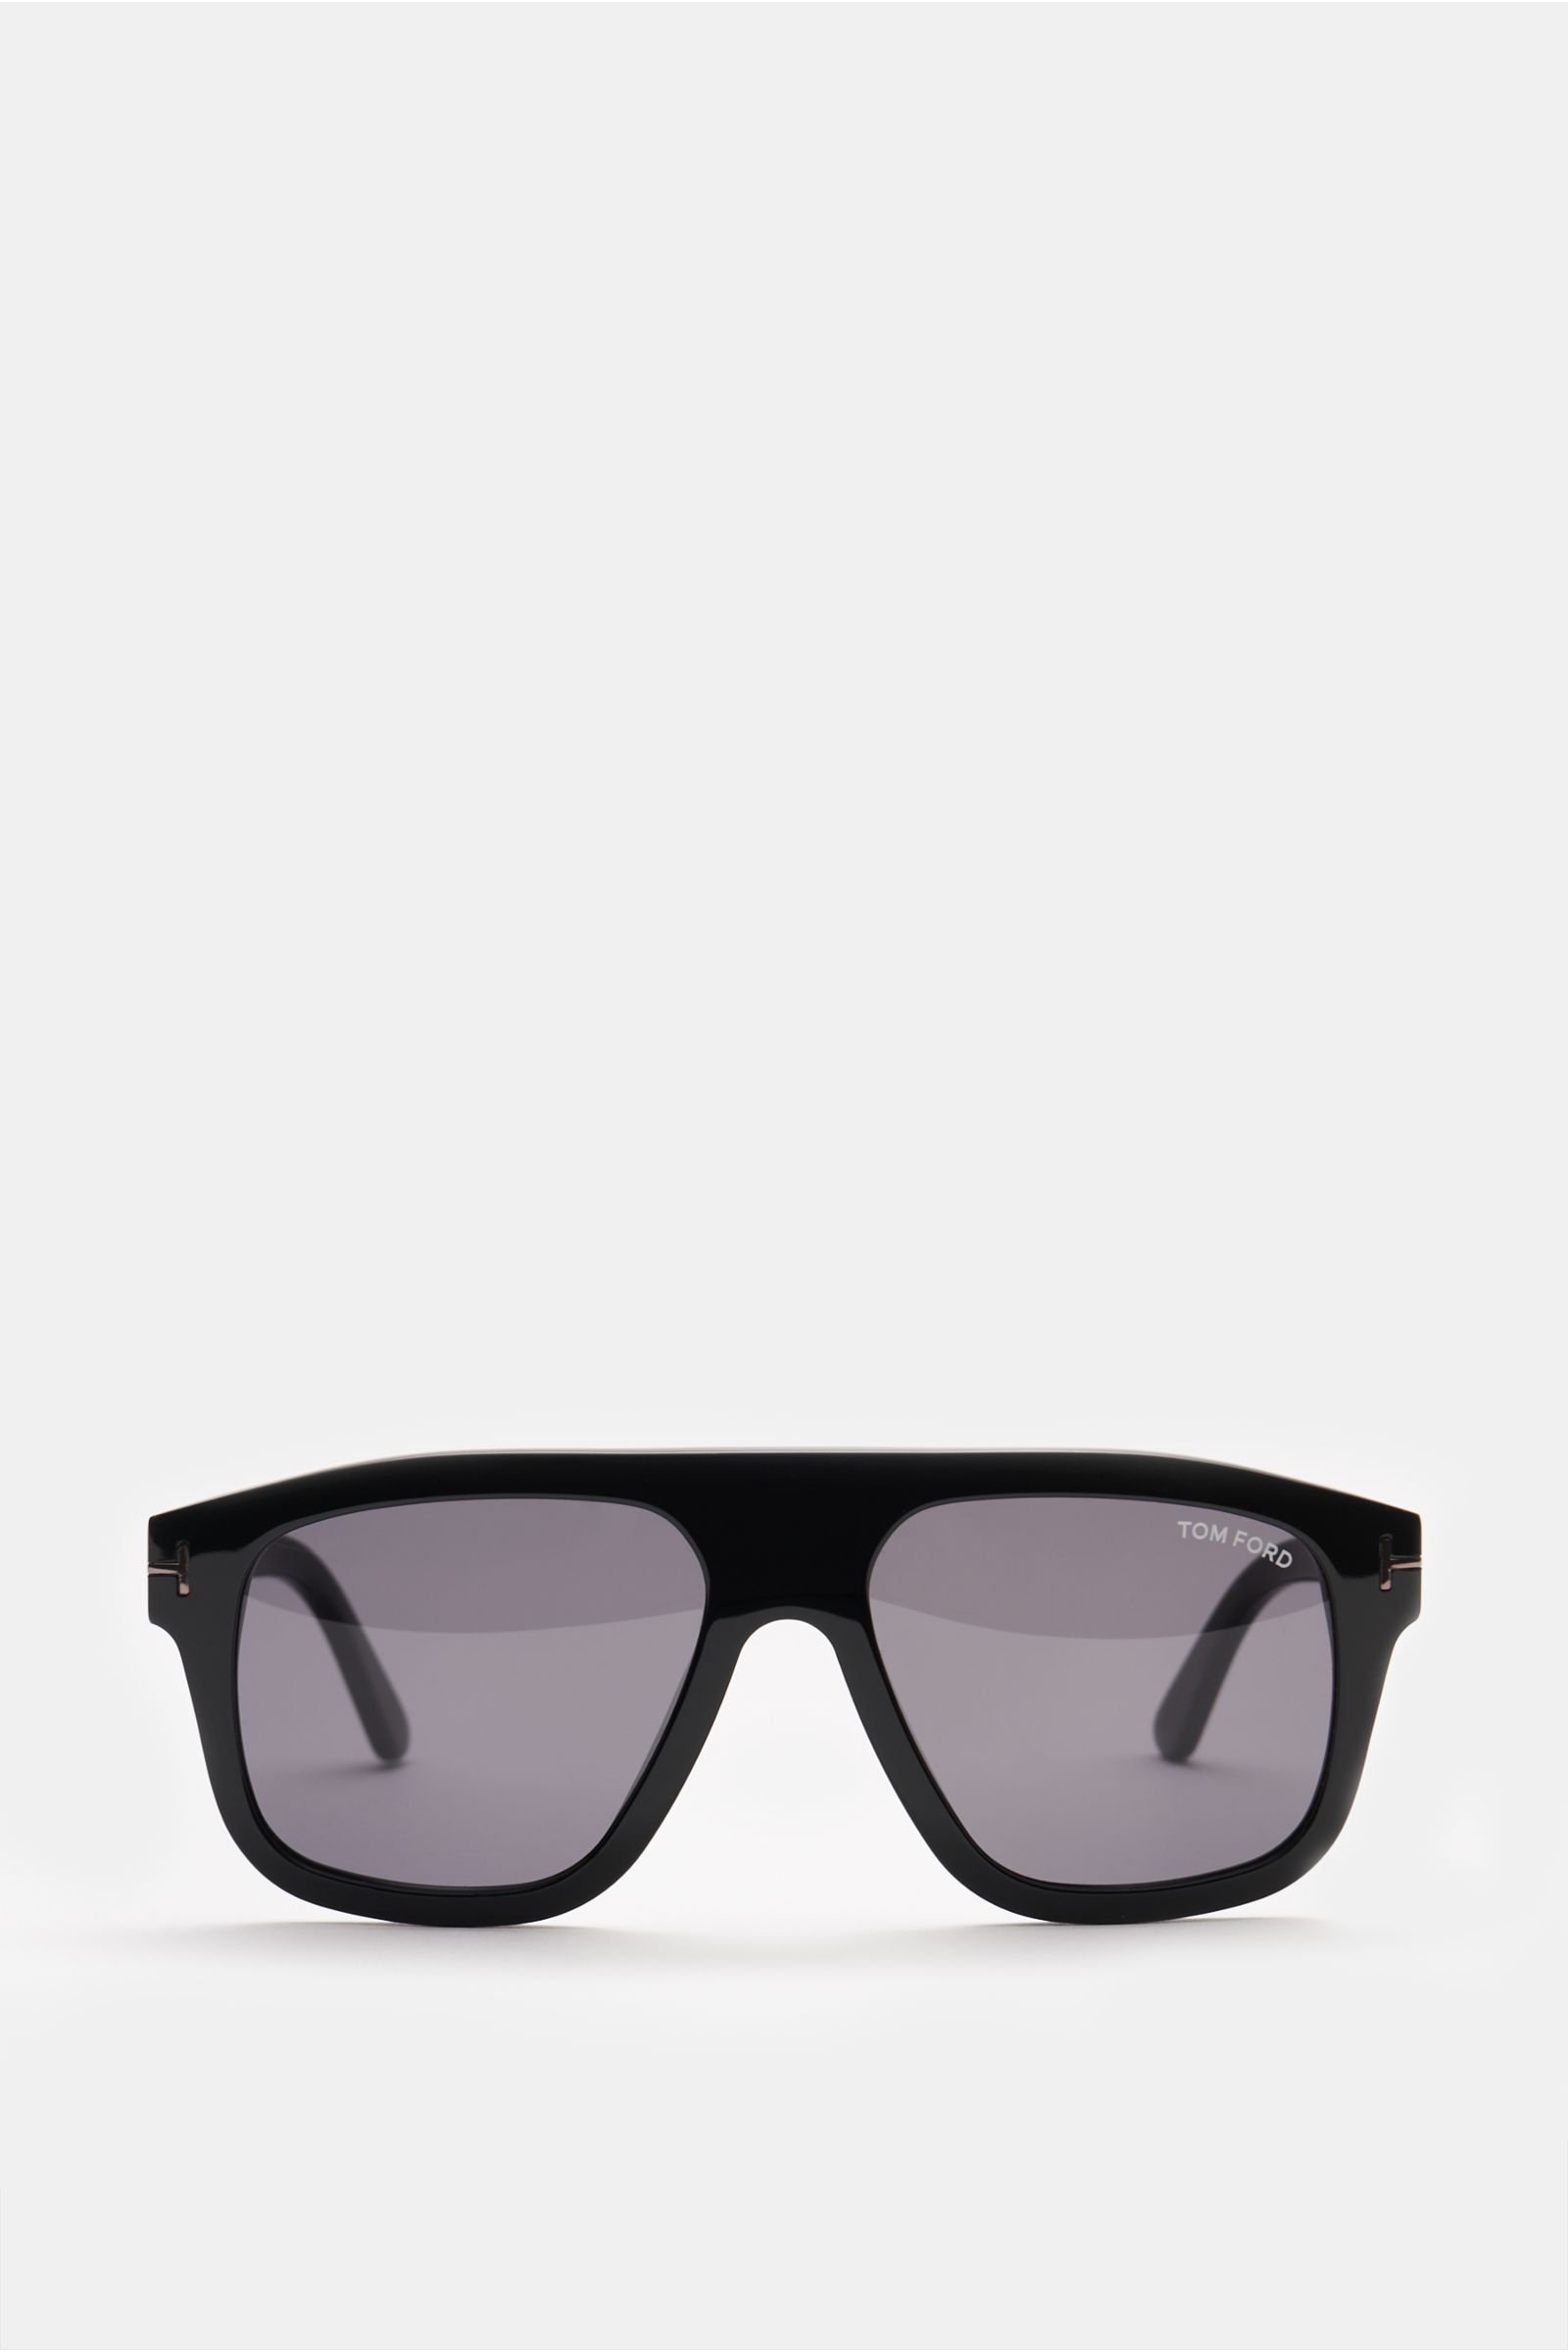 ShadyVEU Super Dark Black Lens Round Sunglasses UV Protection Spring Hinge  Soft Matte Frame Fashion Shades | Walmart Canada